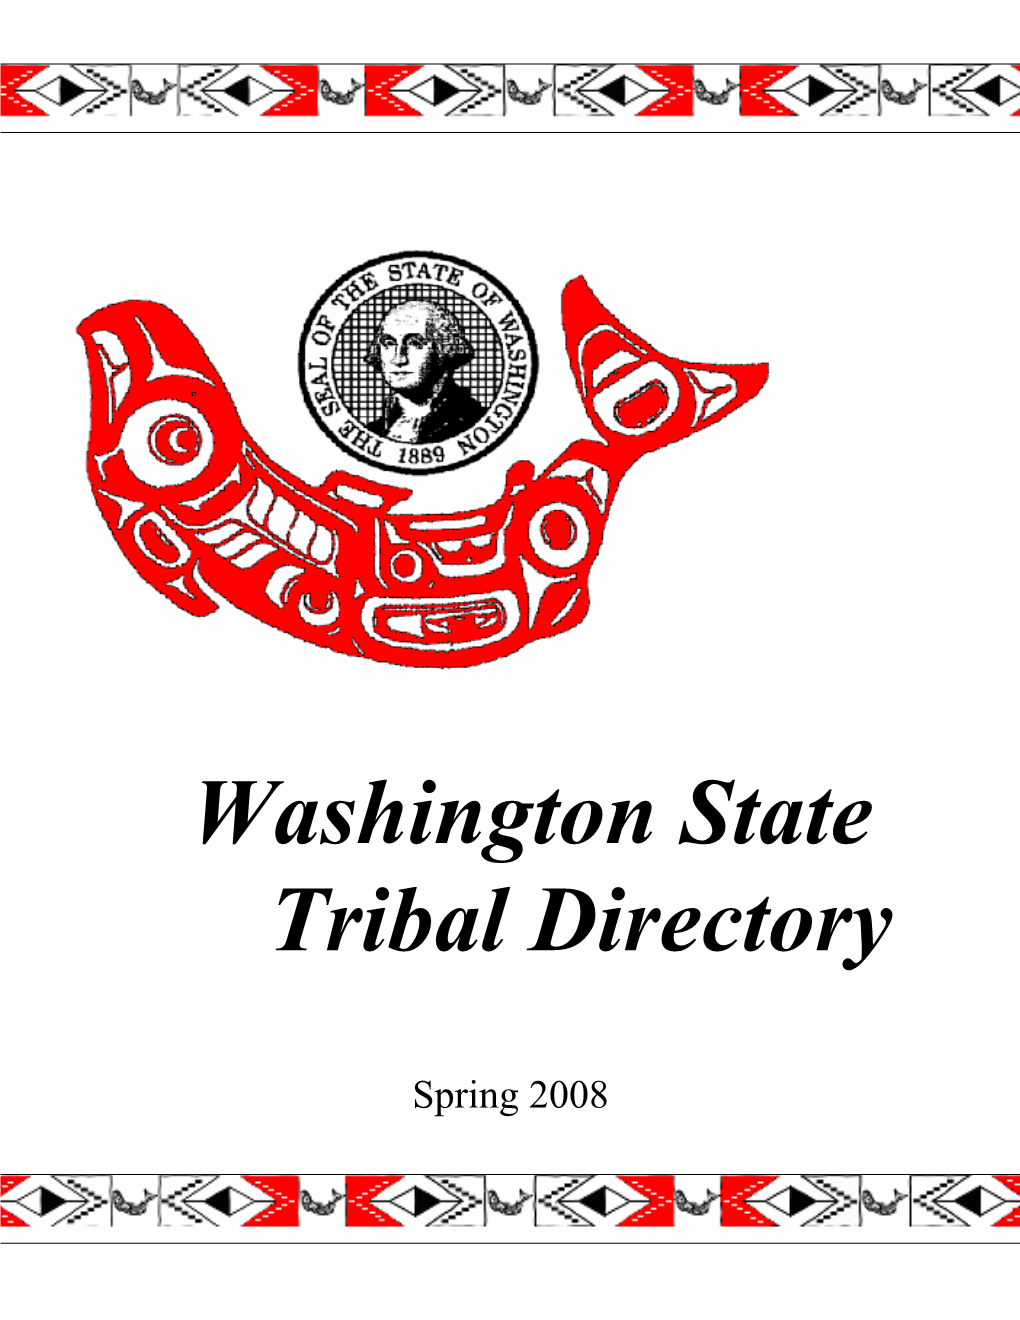 Washington State Tribal Directory, Spring 2008